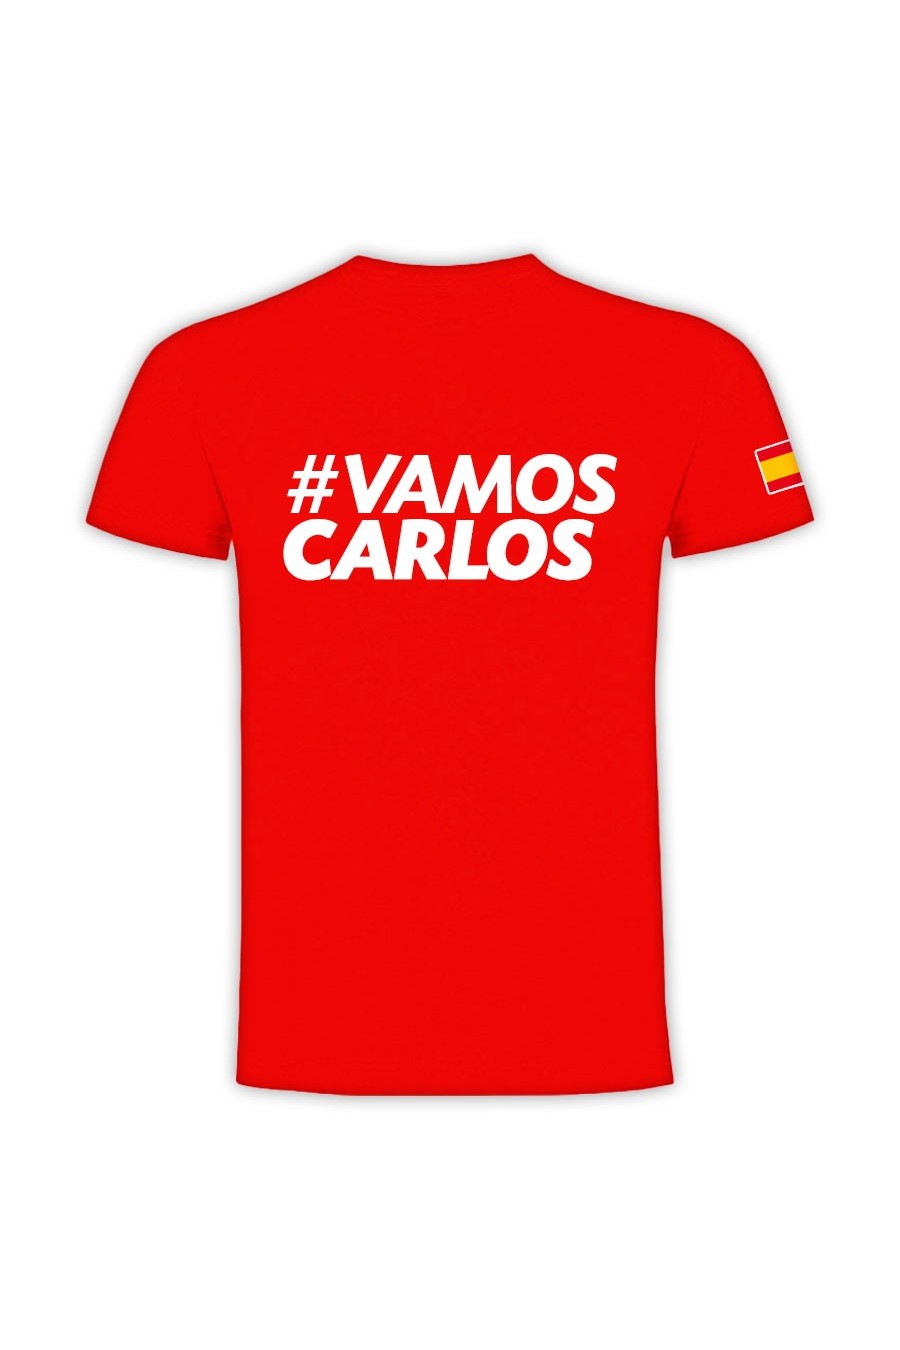 VamosCarlos T-Shirt (mit dem Hashtag-Symbol)